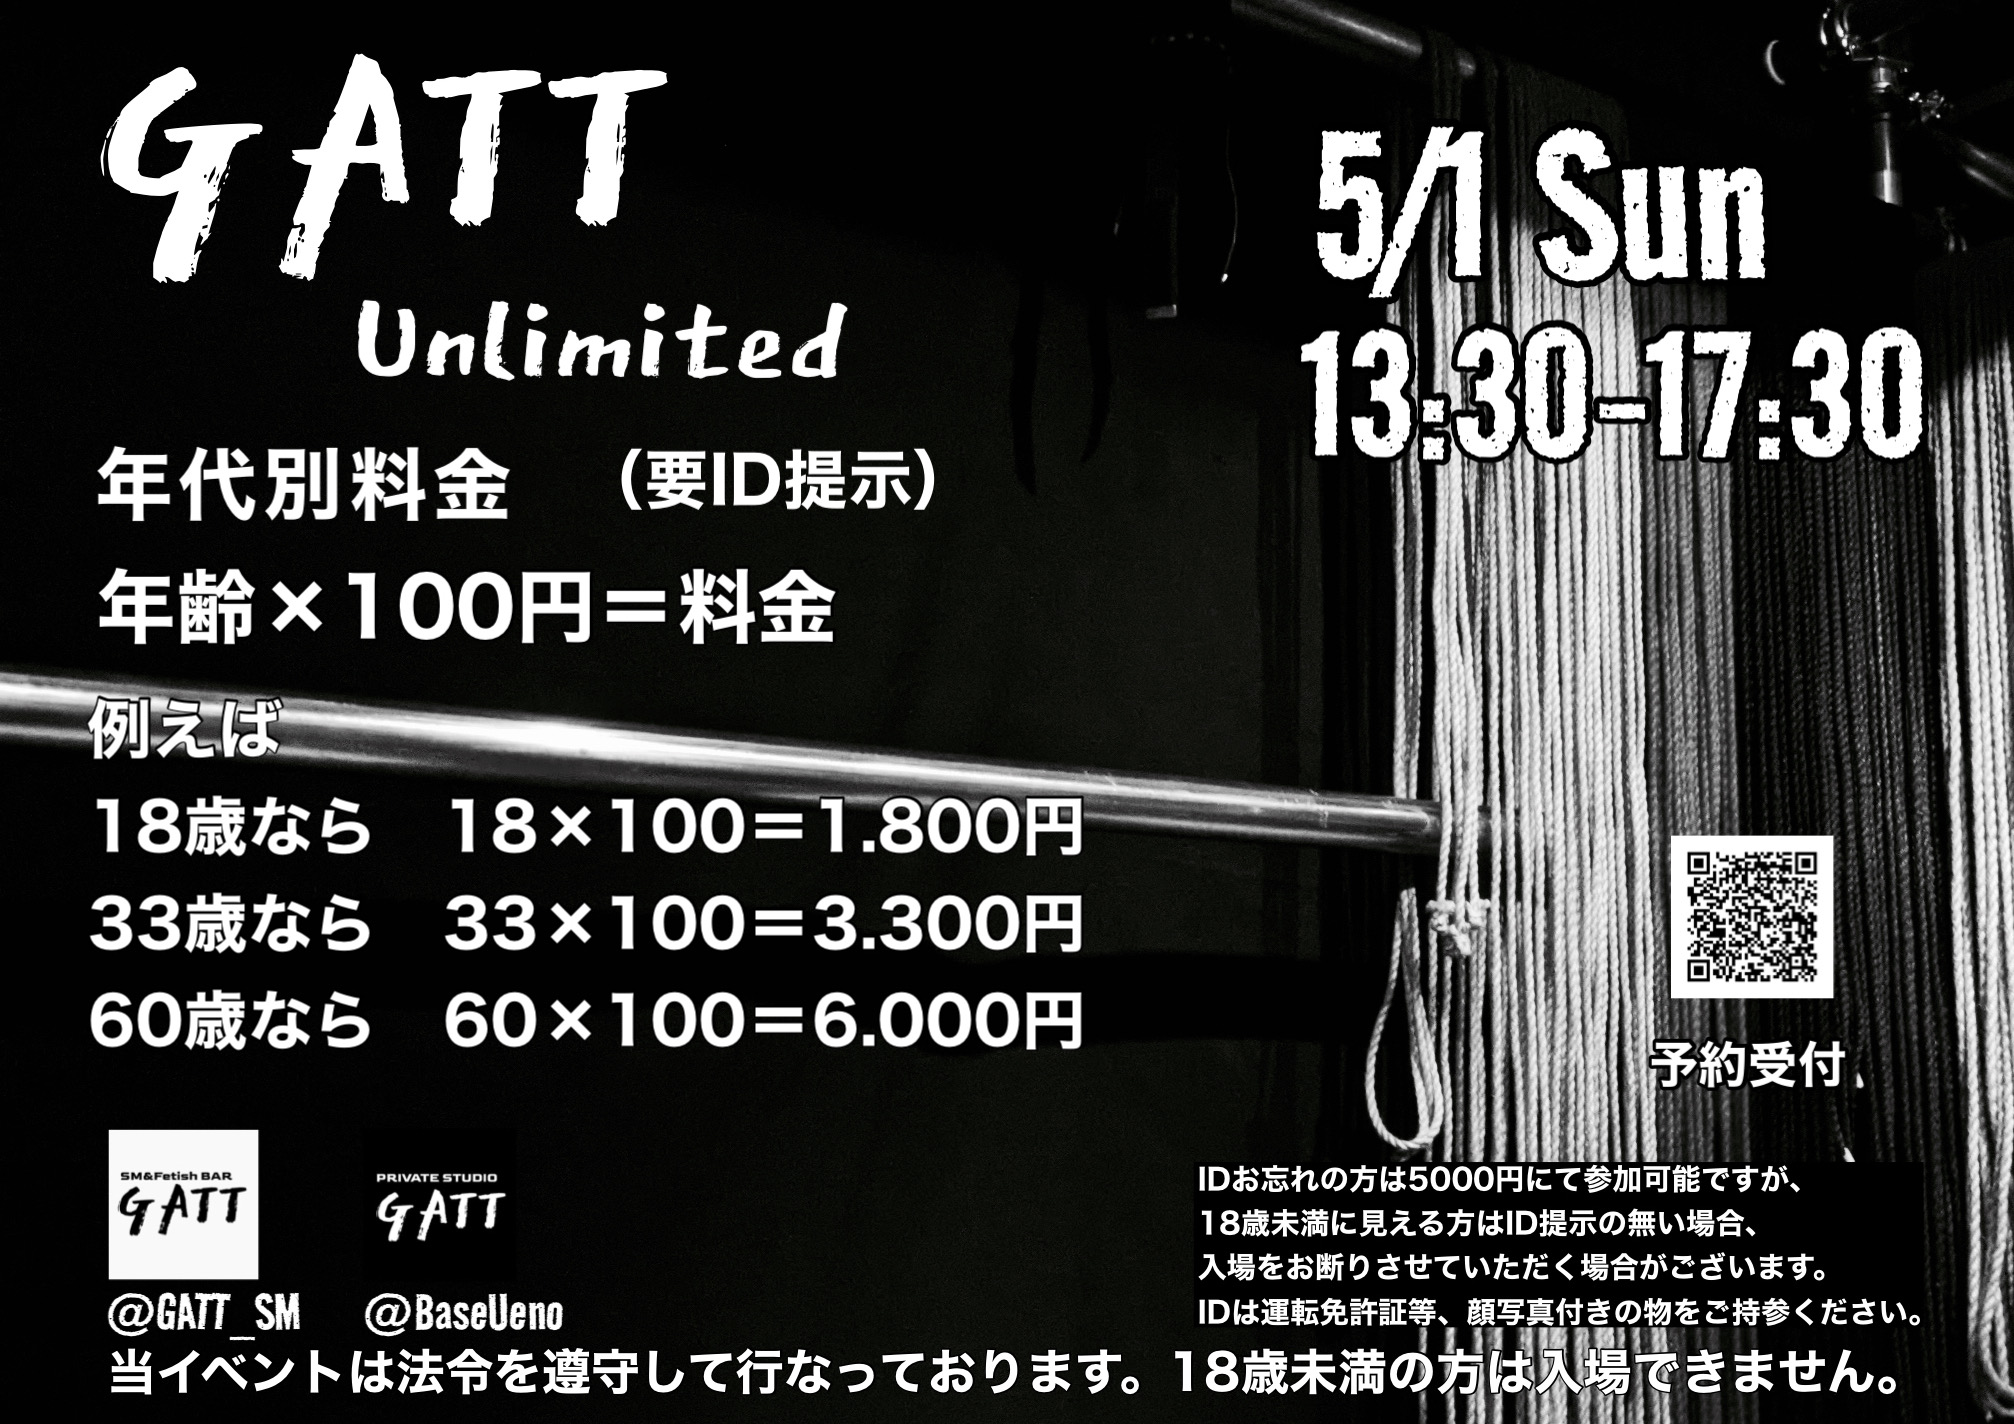 5/1 GATT Unlimited